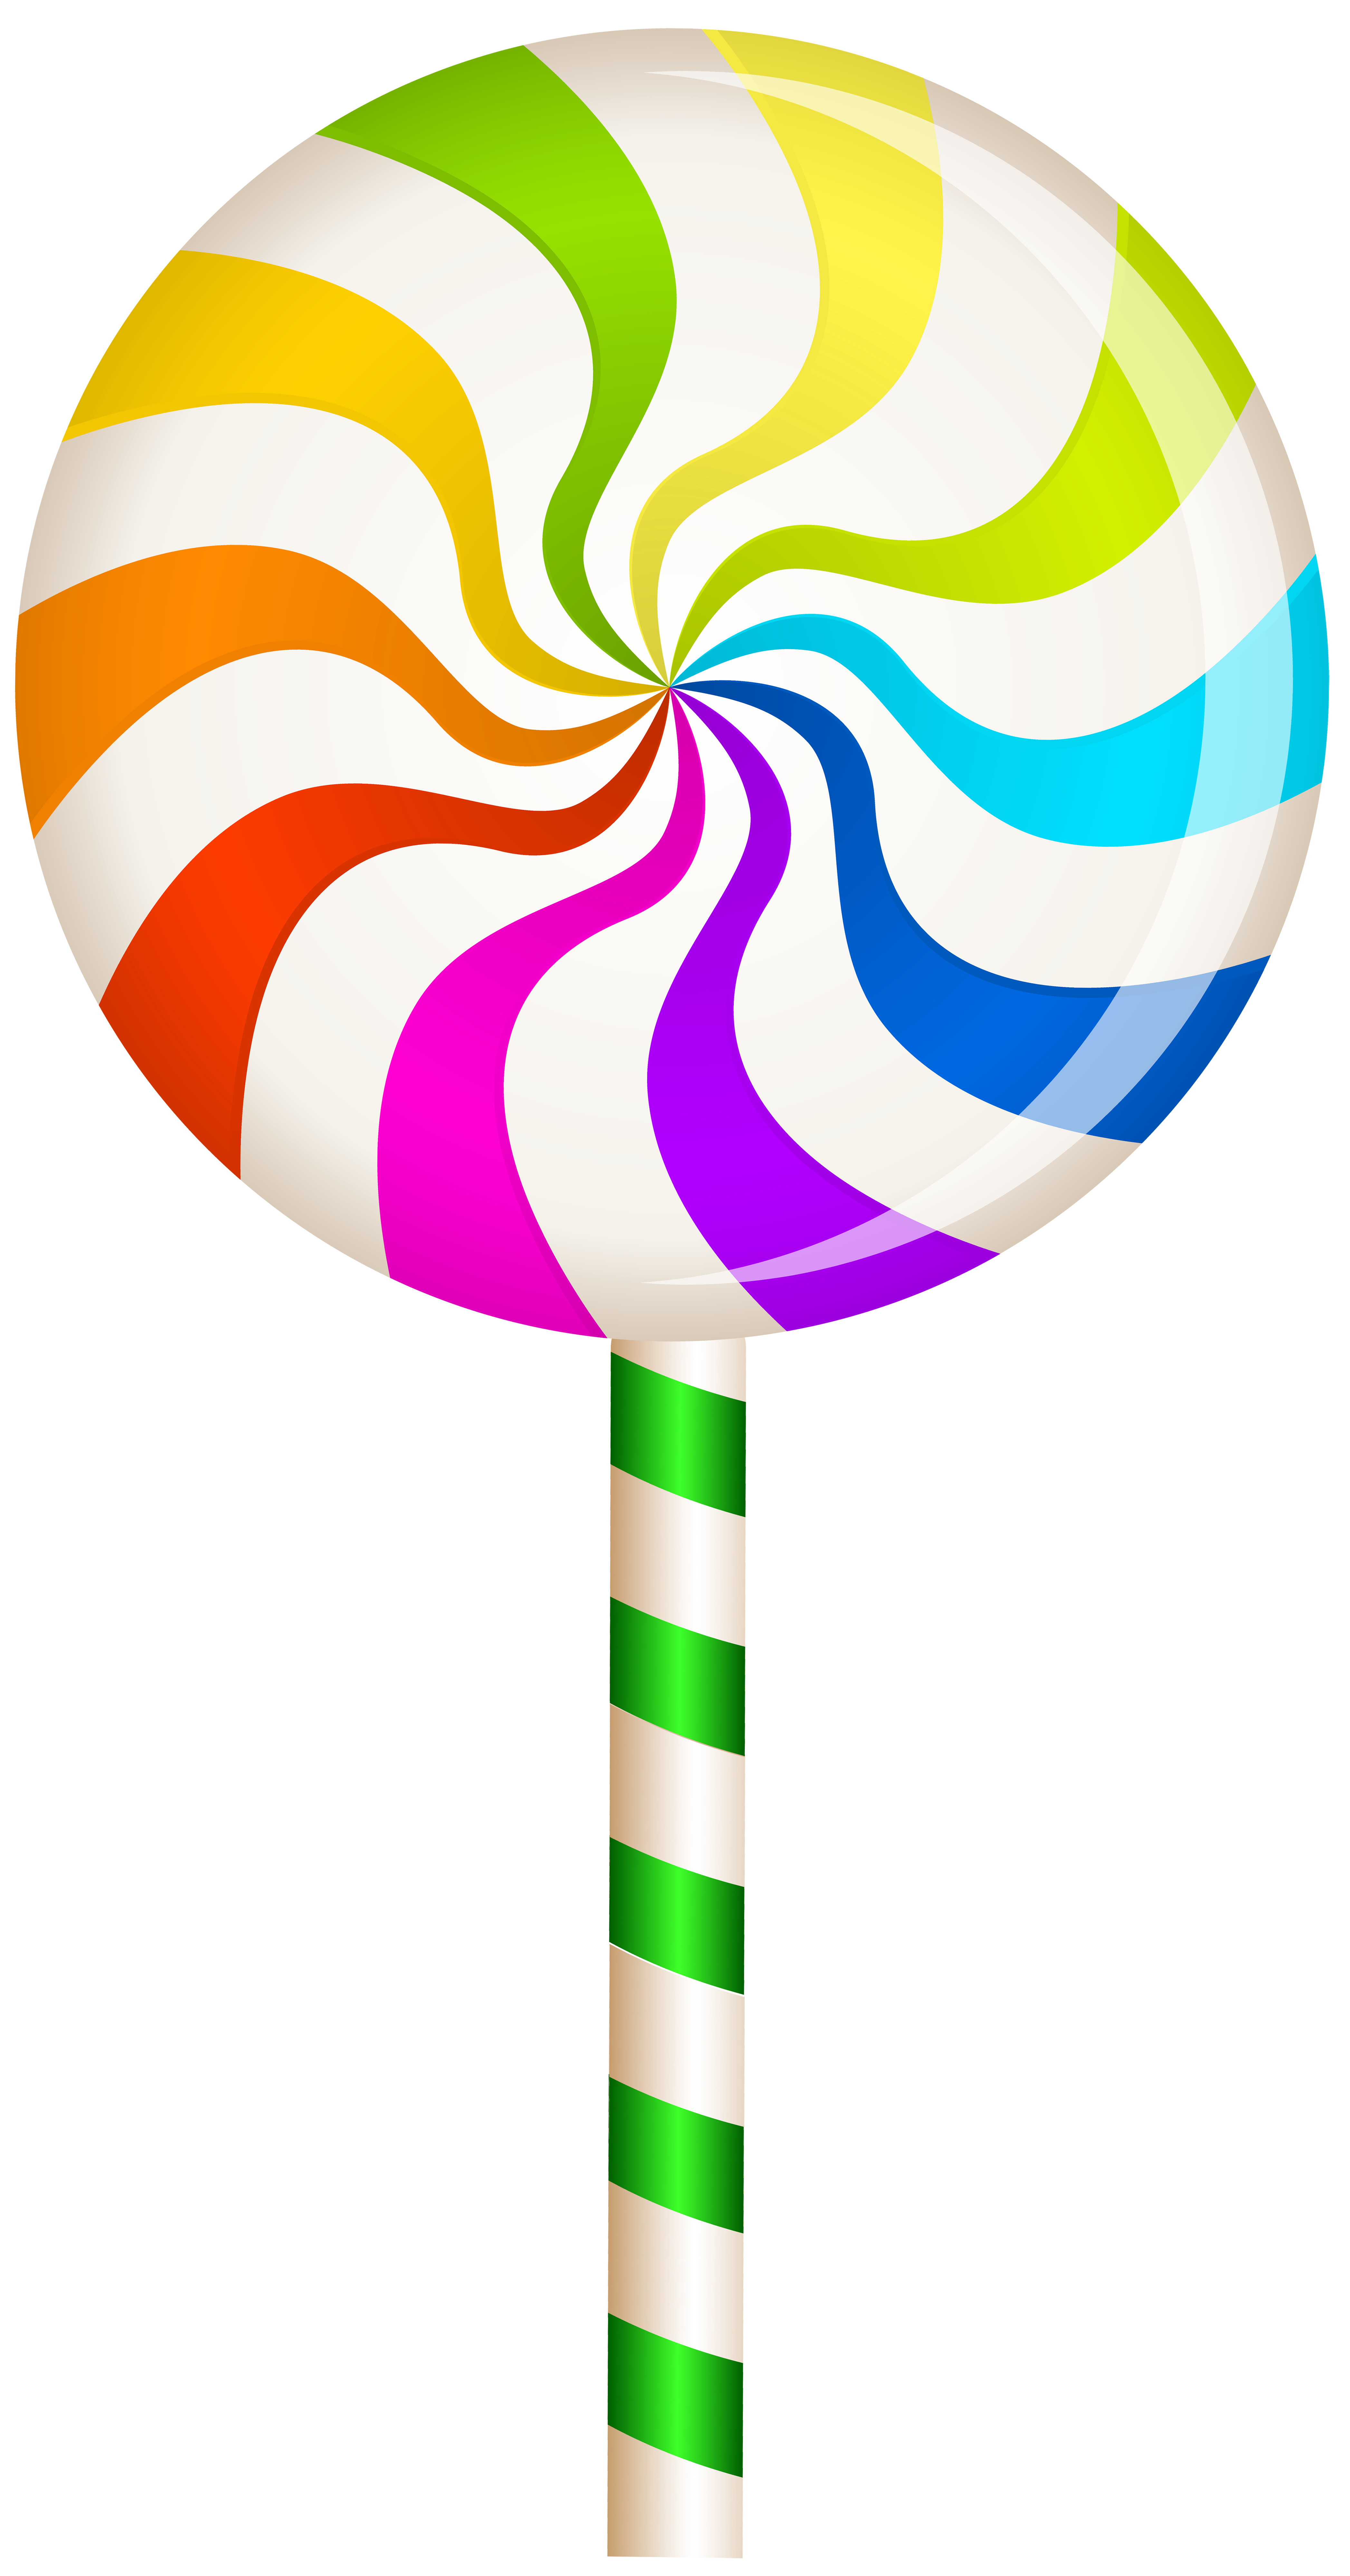 Multicolor Swirl Lollipop PNG Clip Art Image | Gallery Yopriceville ...